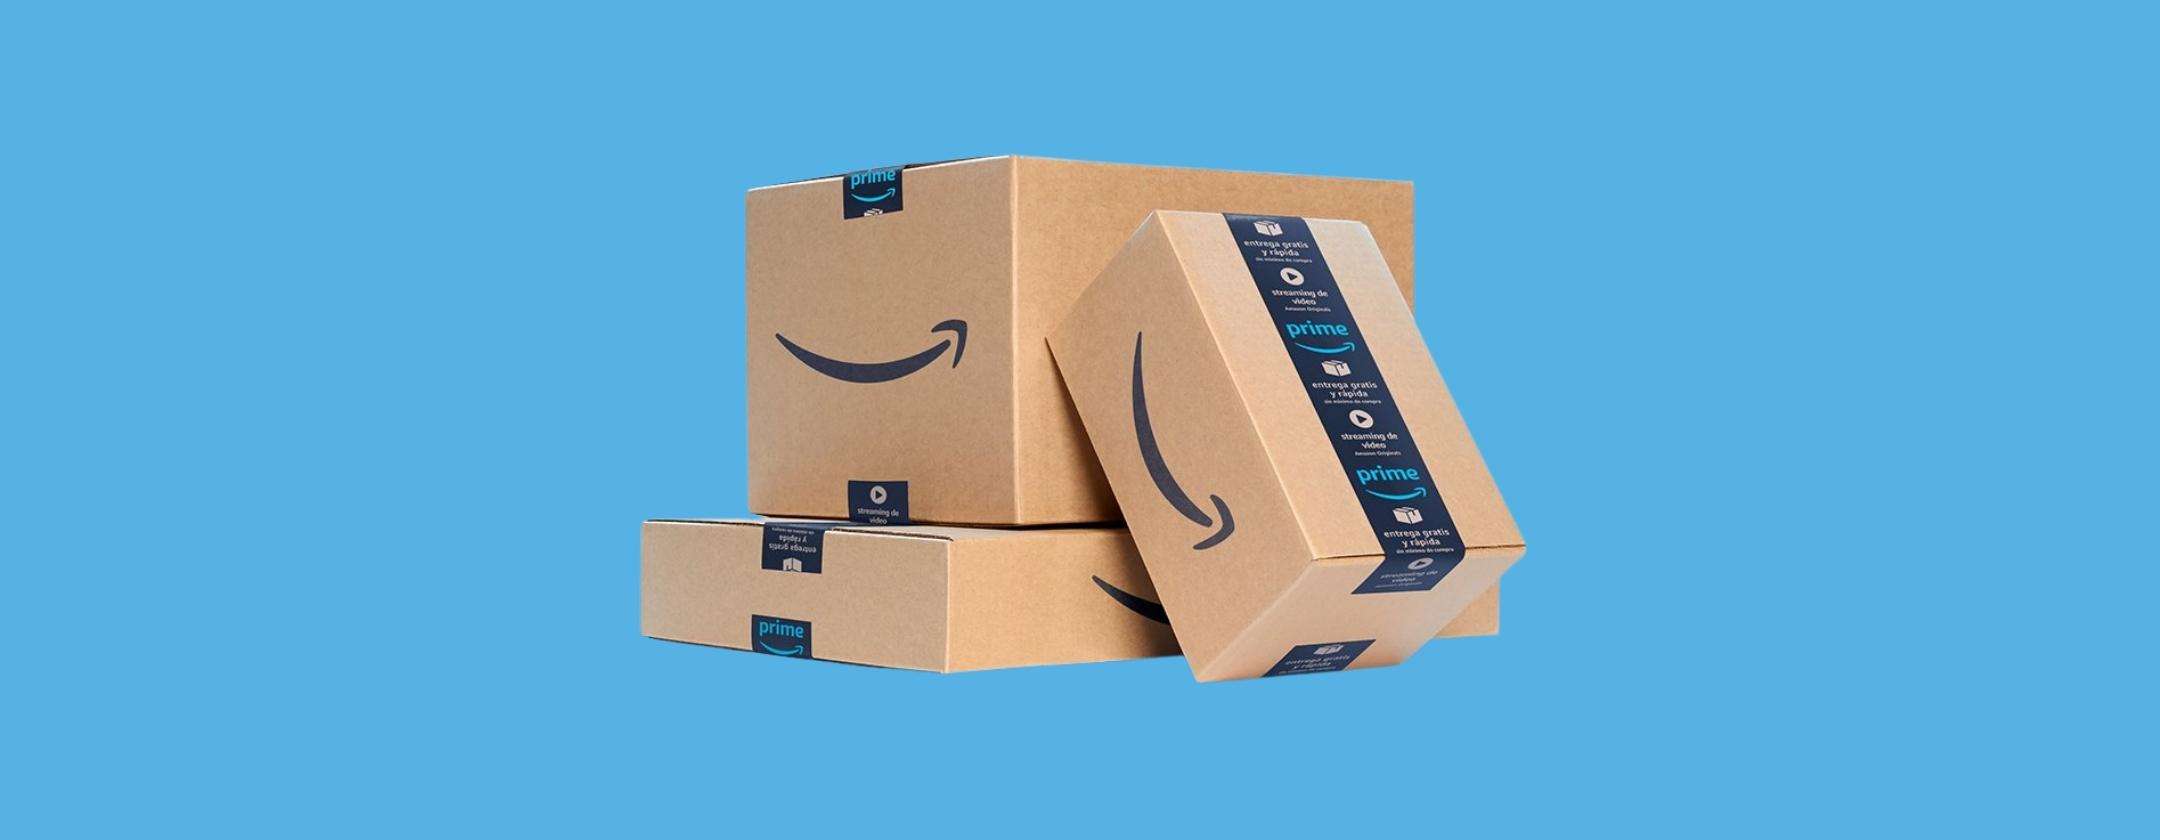 Amazon sta preparando un secondo evento shopping Prime esclusivo